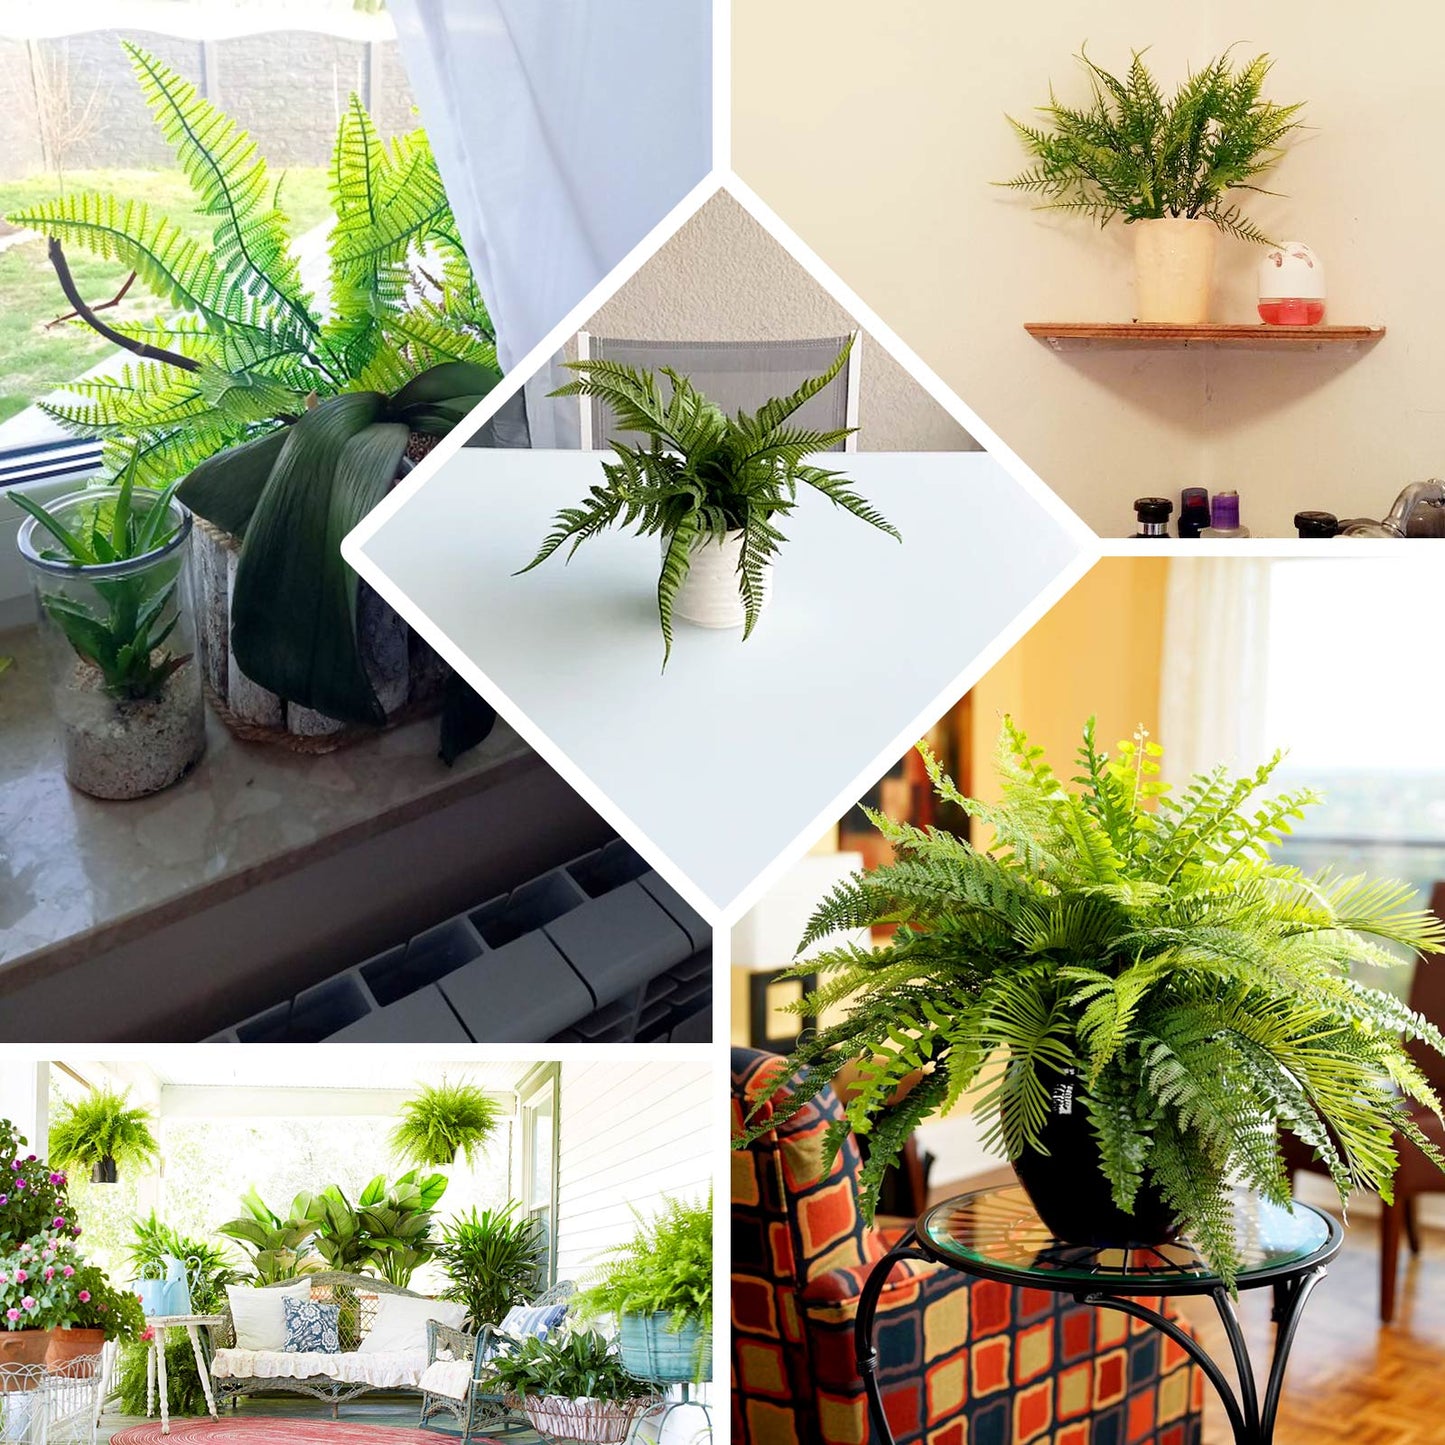 Artificial Asparagus Fern Green Leaf Plant, Premium Real Touch Indoor Bush Spray 20"